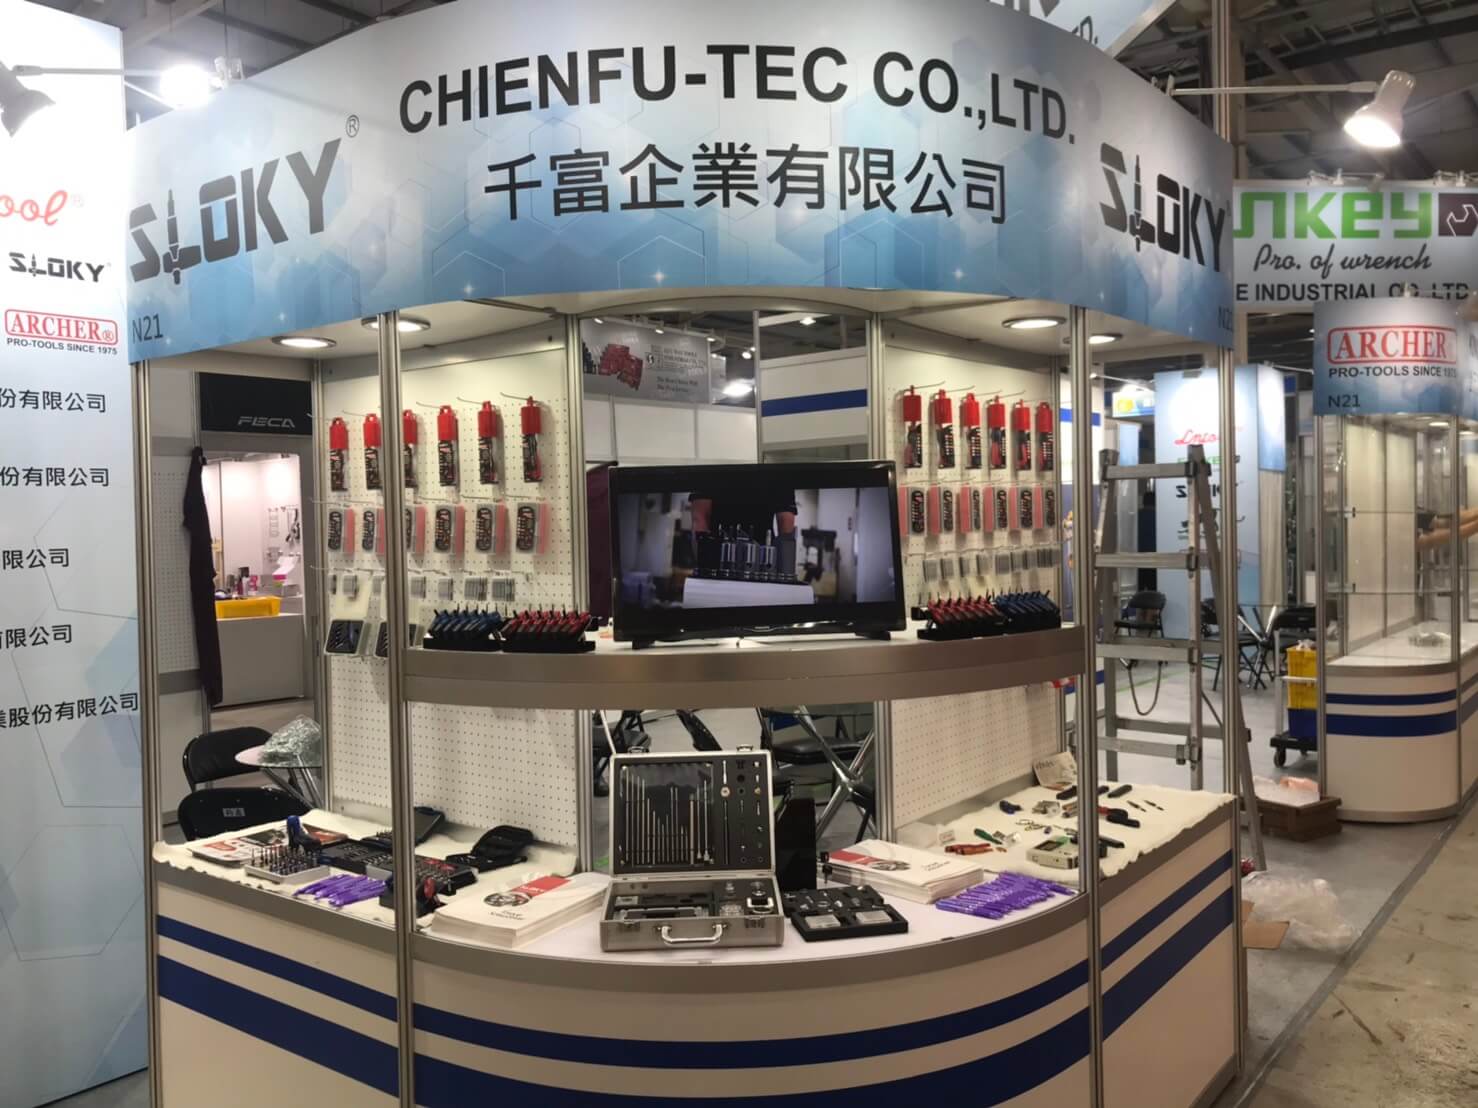 Chienfu Sloky Taiwan hardware show 2018-2